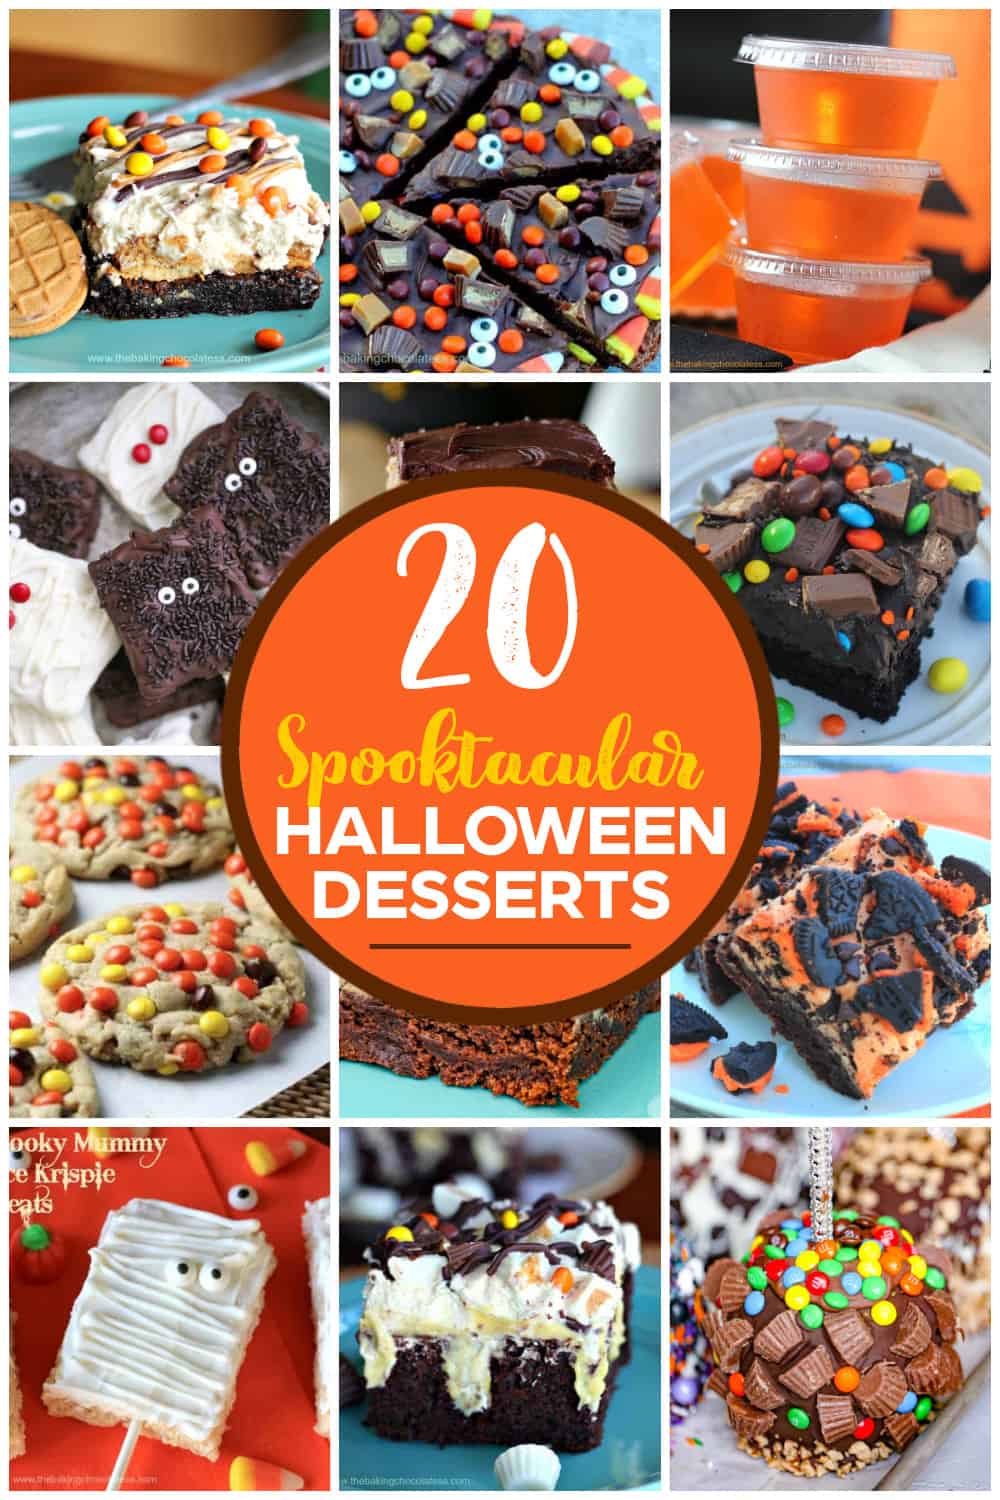 20 Spooktacular Halloween Desserts